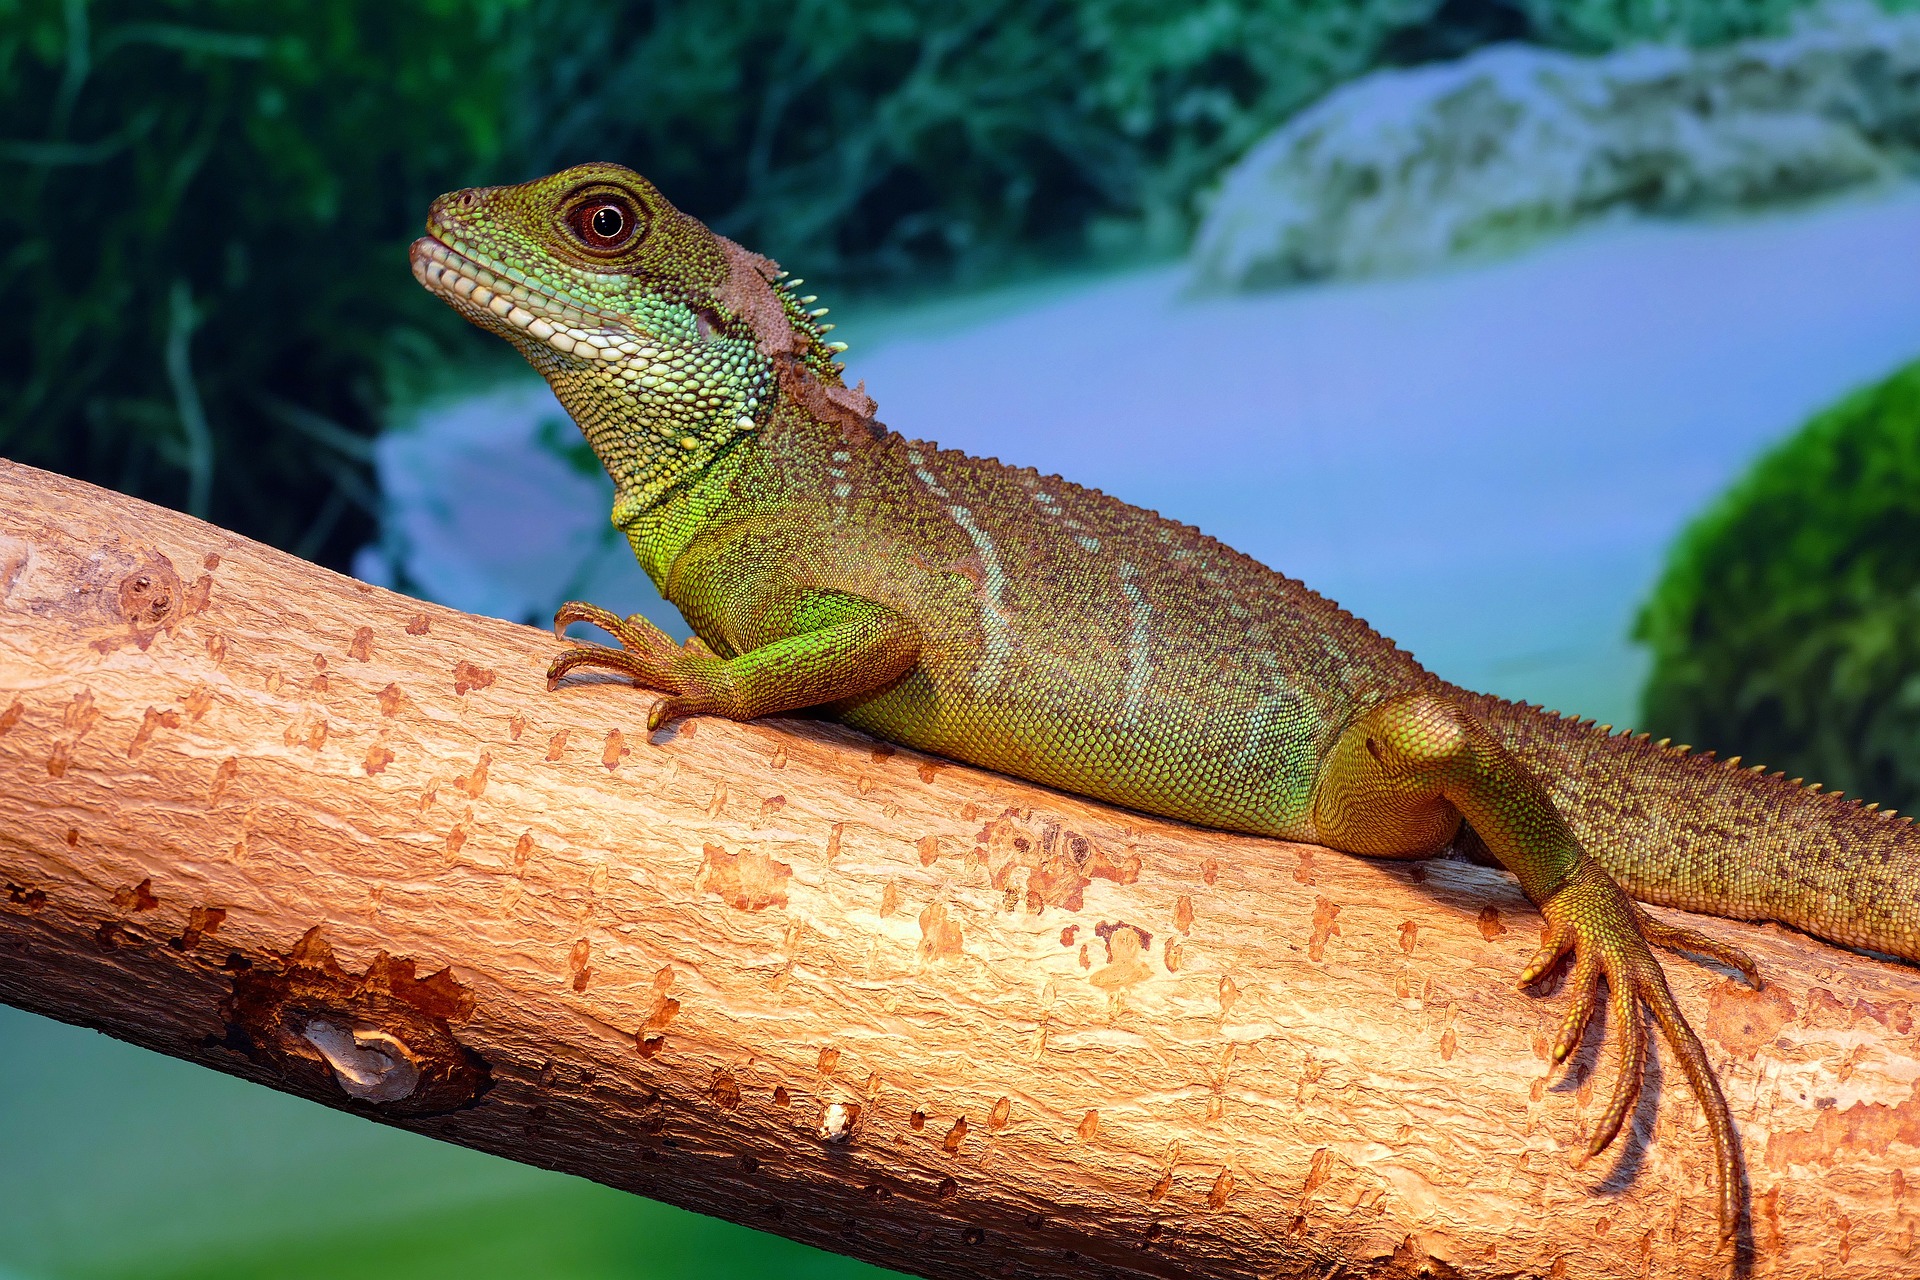 Lizard sitting on a tree branch